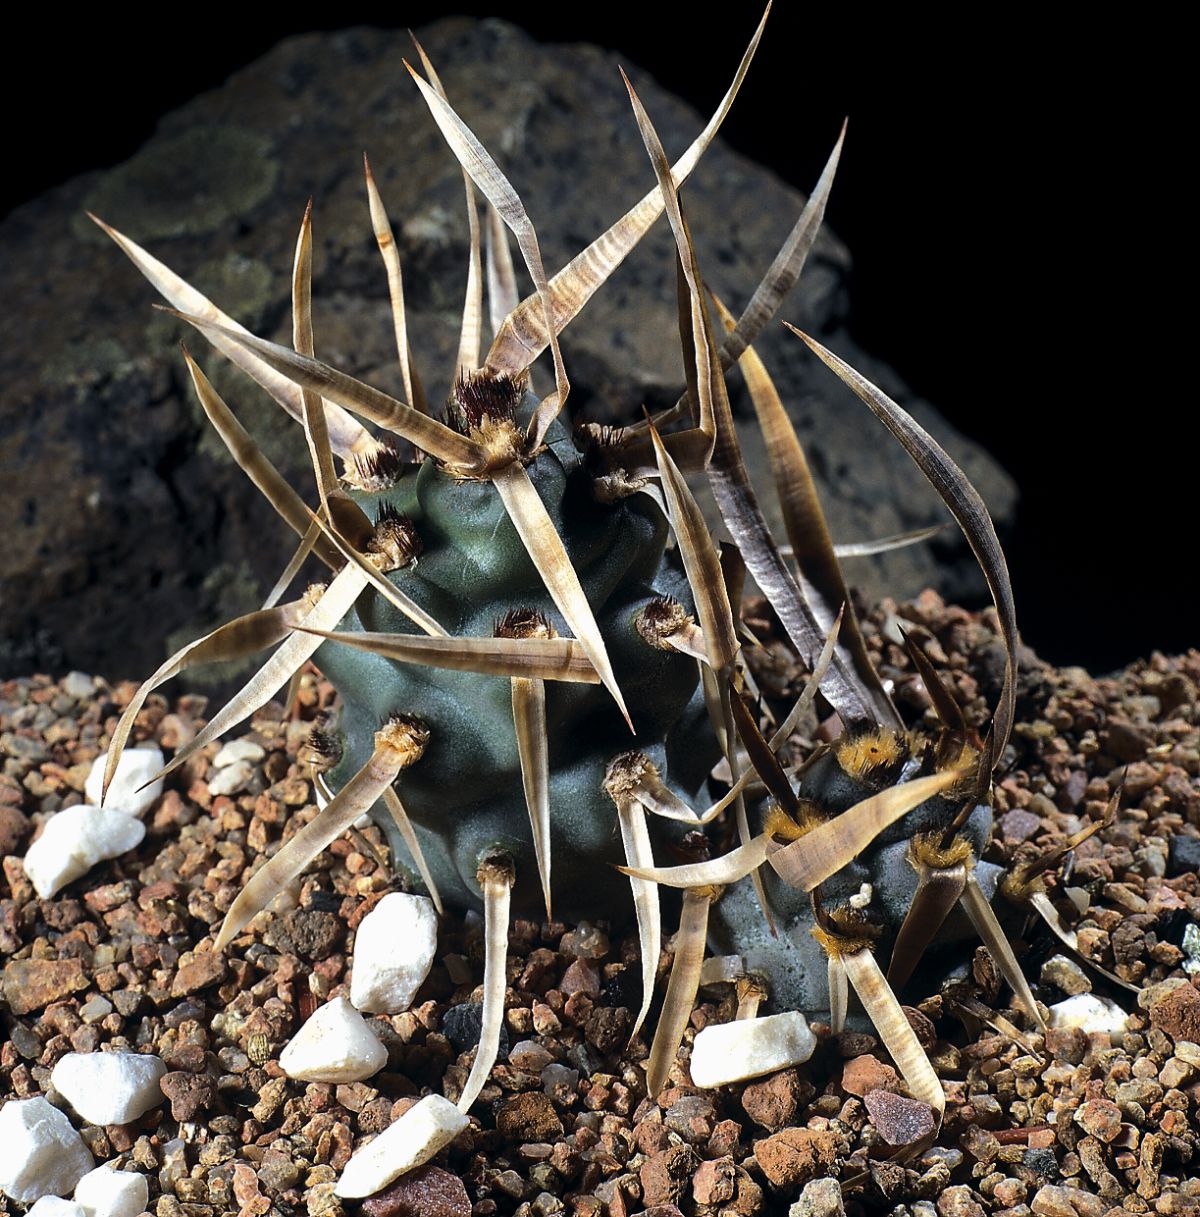 Tephrocactus articulatus var. papyracanthus with white spikes.